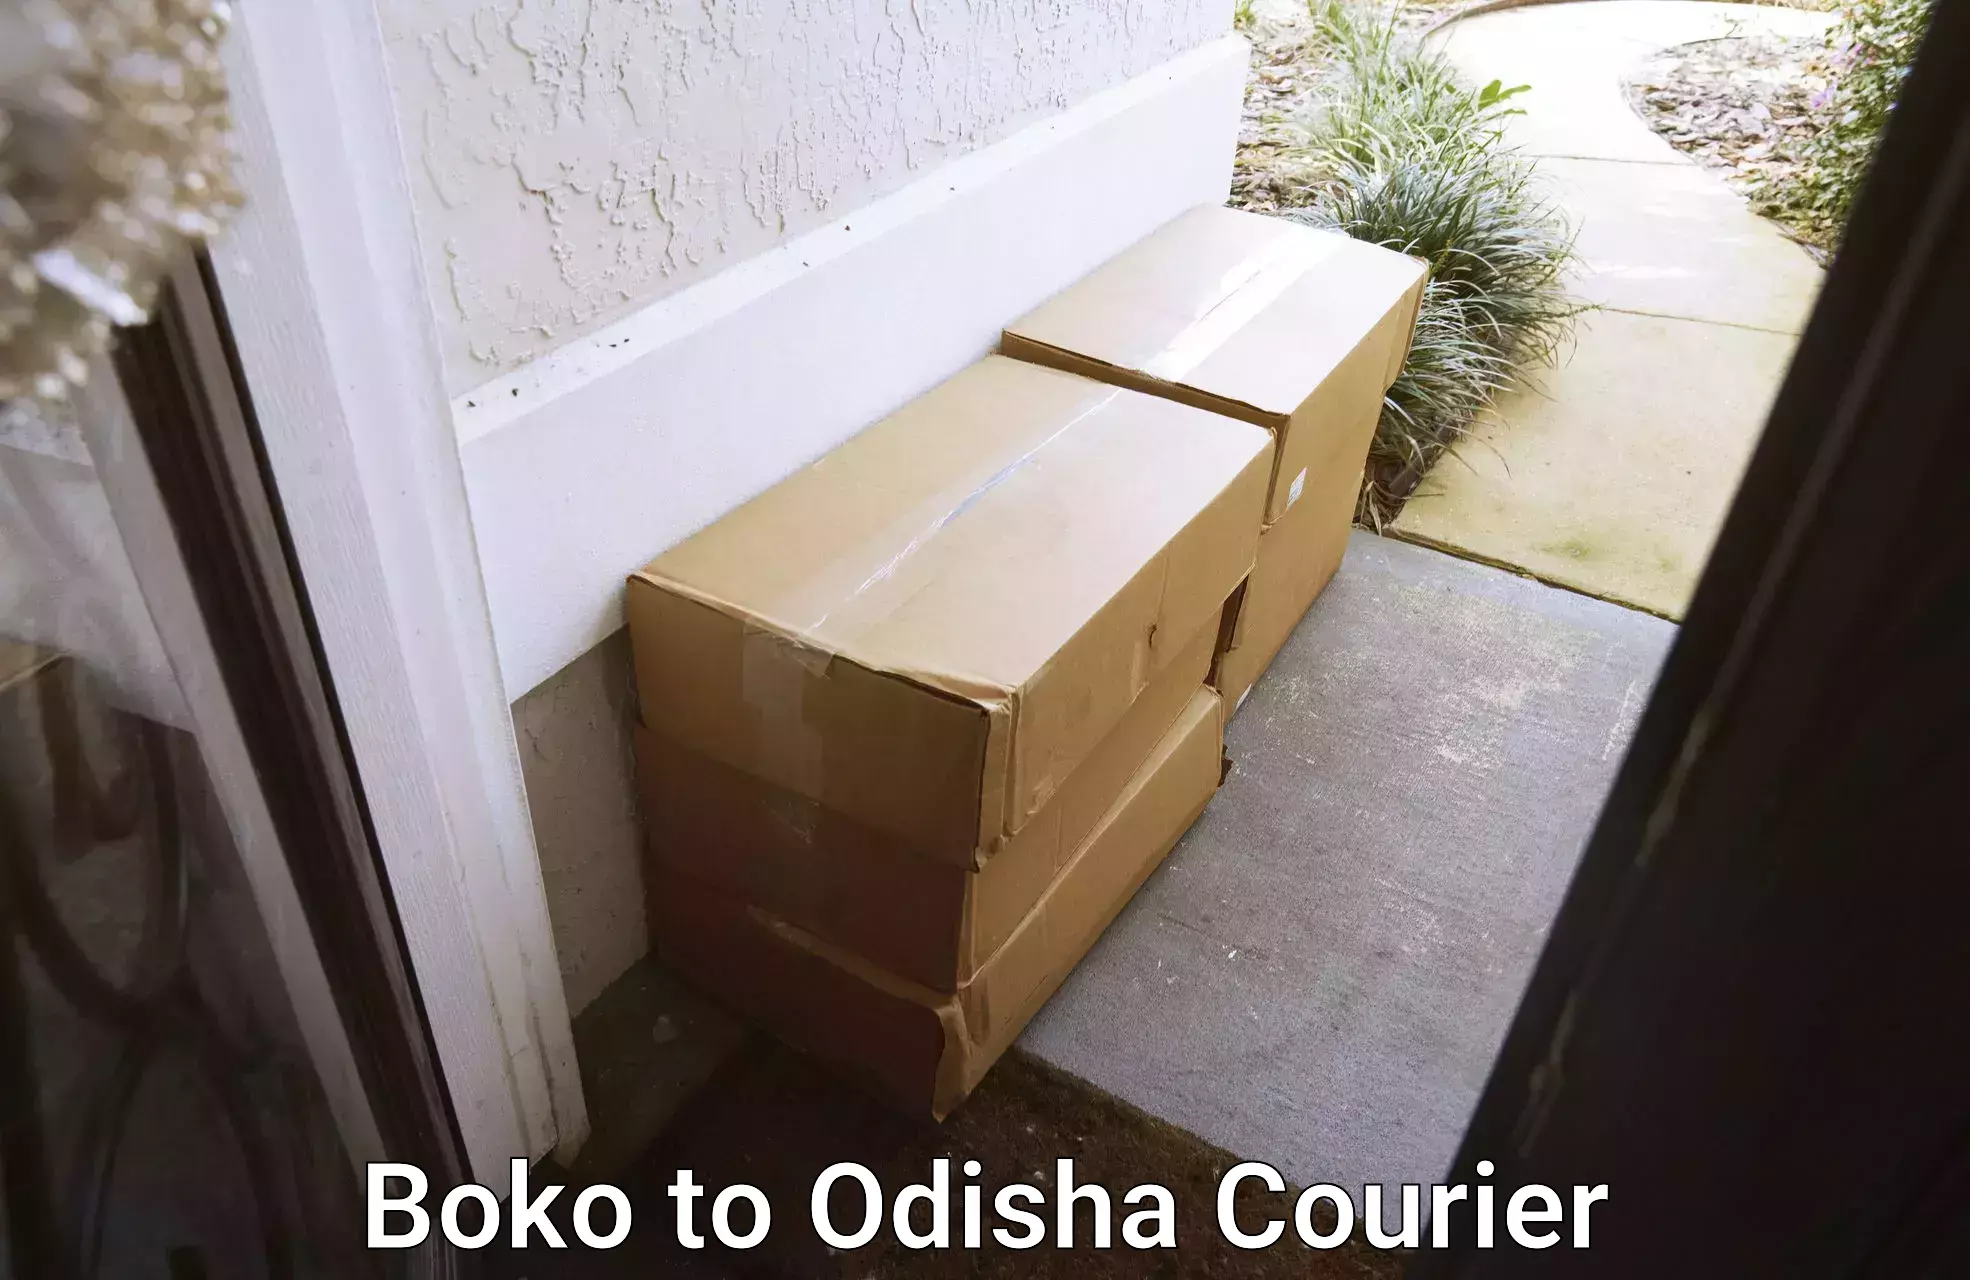 High-performance logistics Boko to Odisha